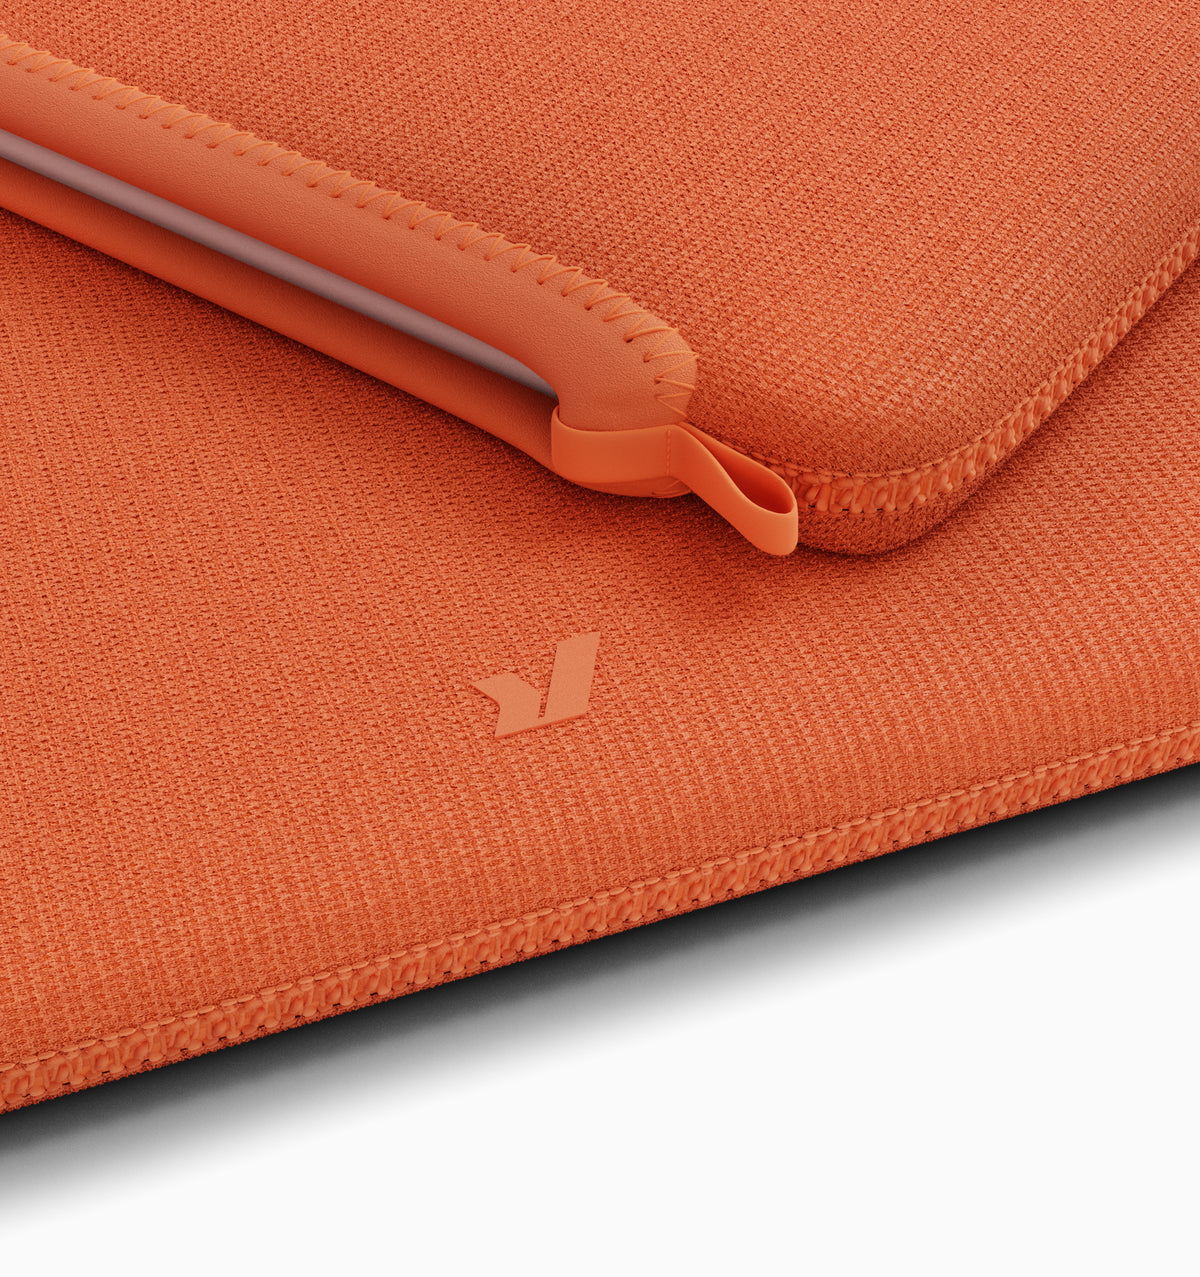 Rushfaster Laptop Sleeve For 14" MacBook Pro - Orange